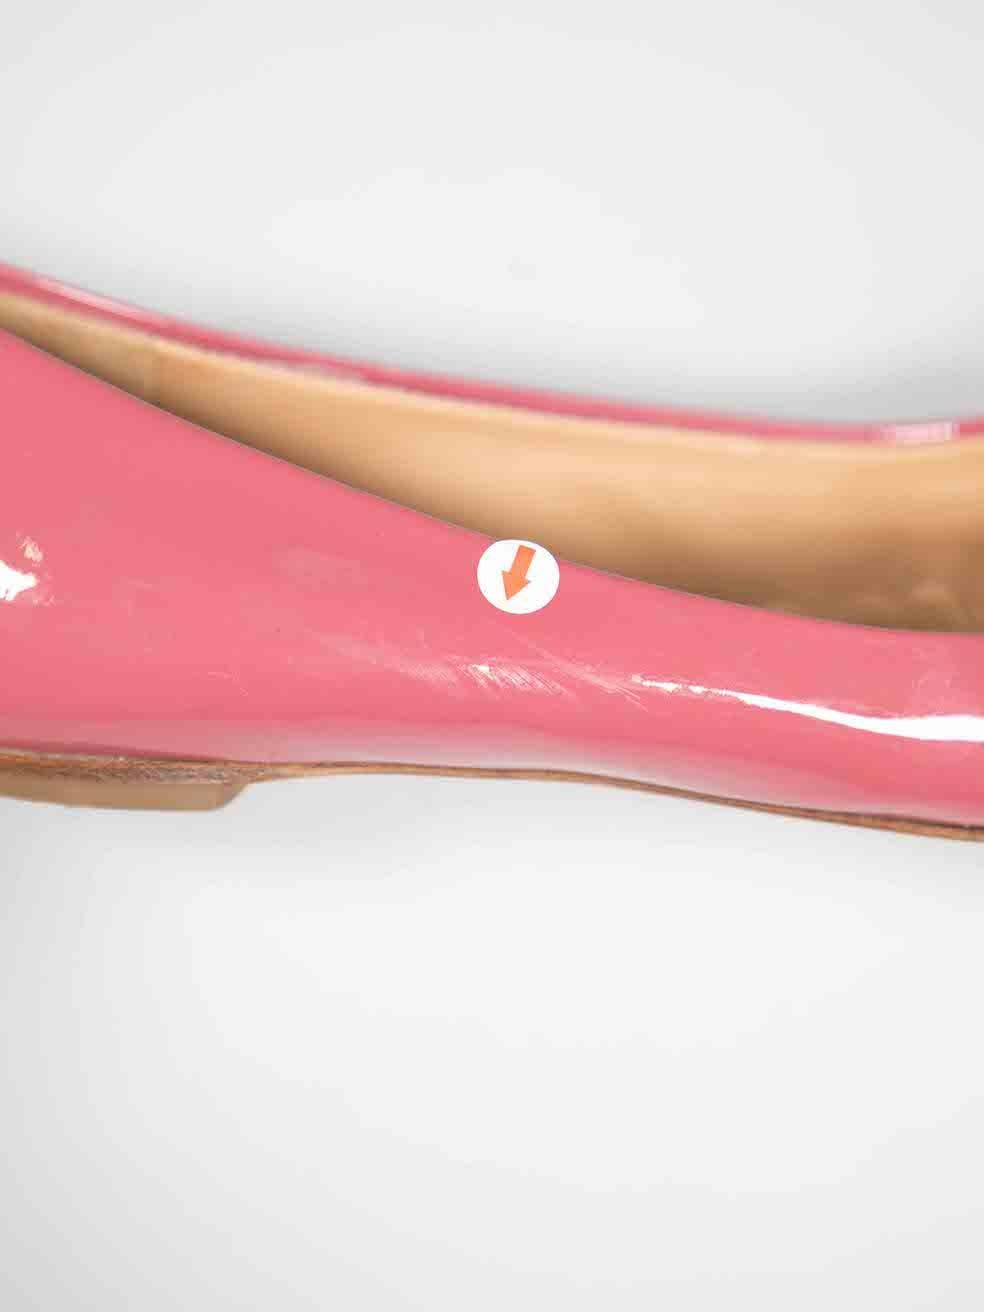 Salvatore Ferragamo Pink Patent Vara Ballet Flats Size US 7 For Sale 3